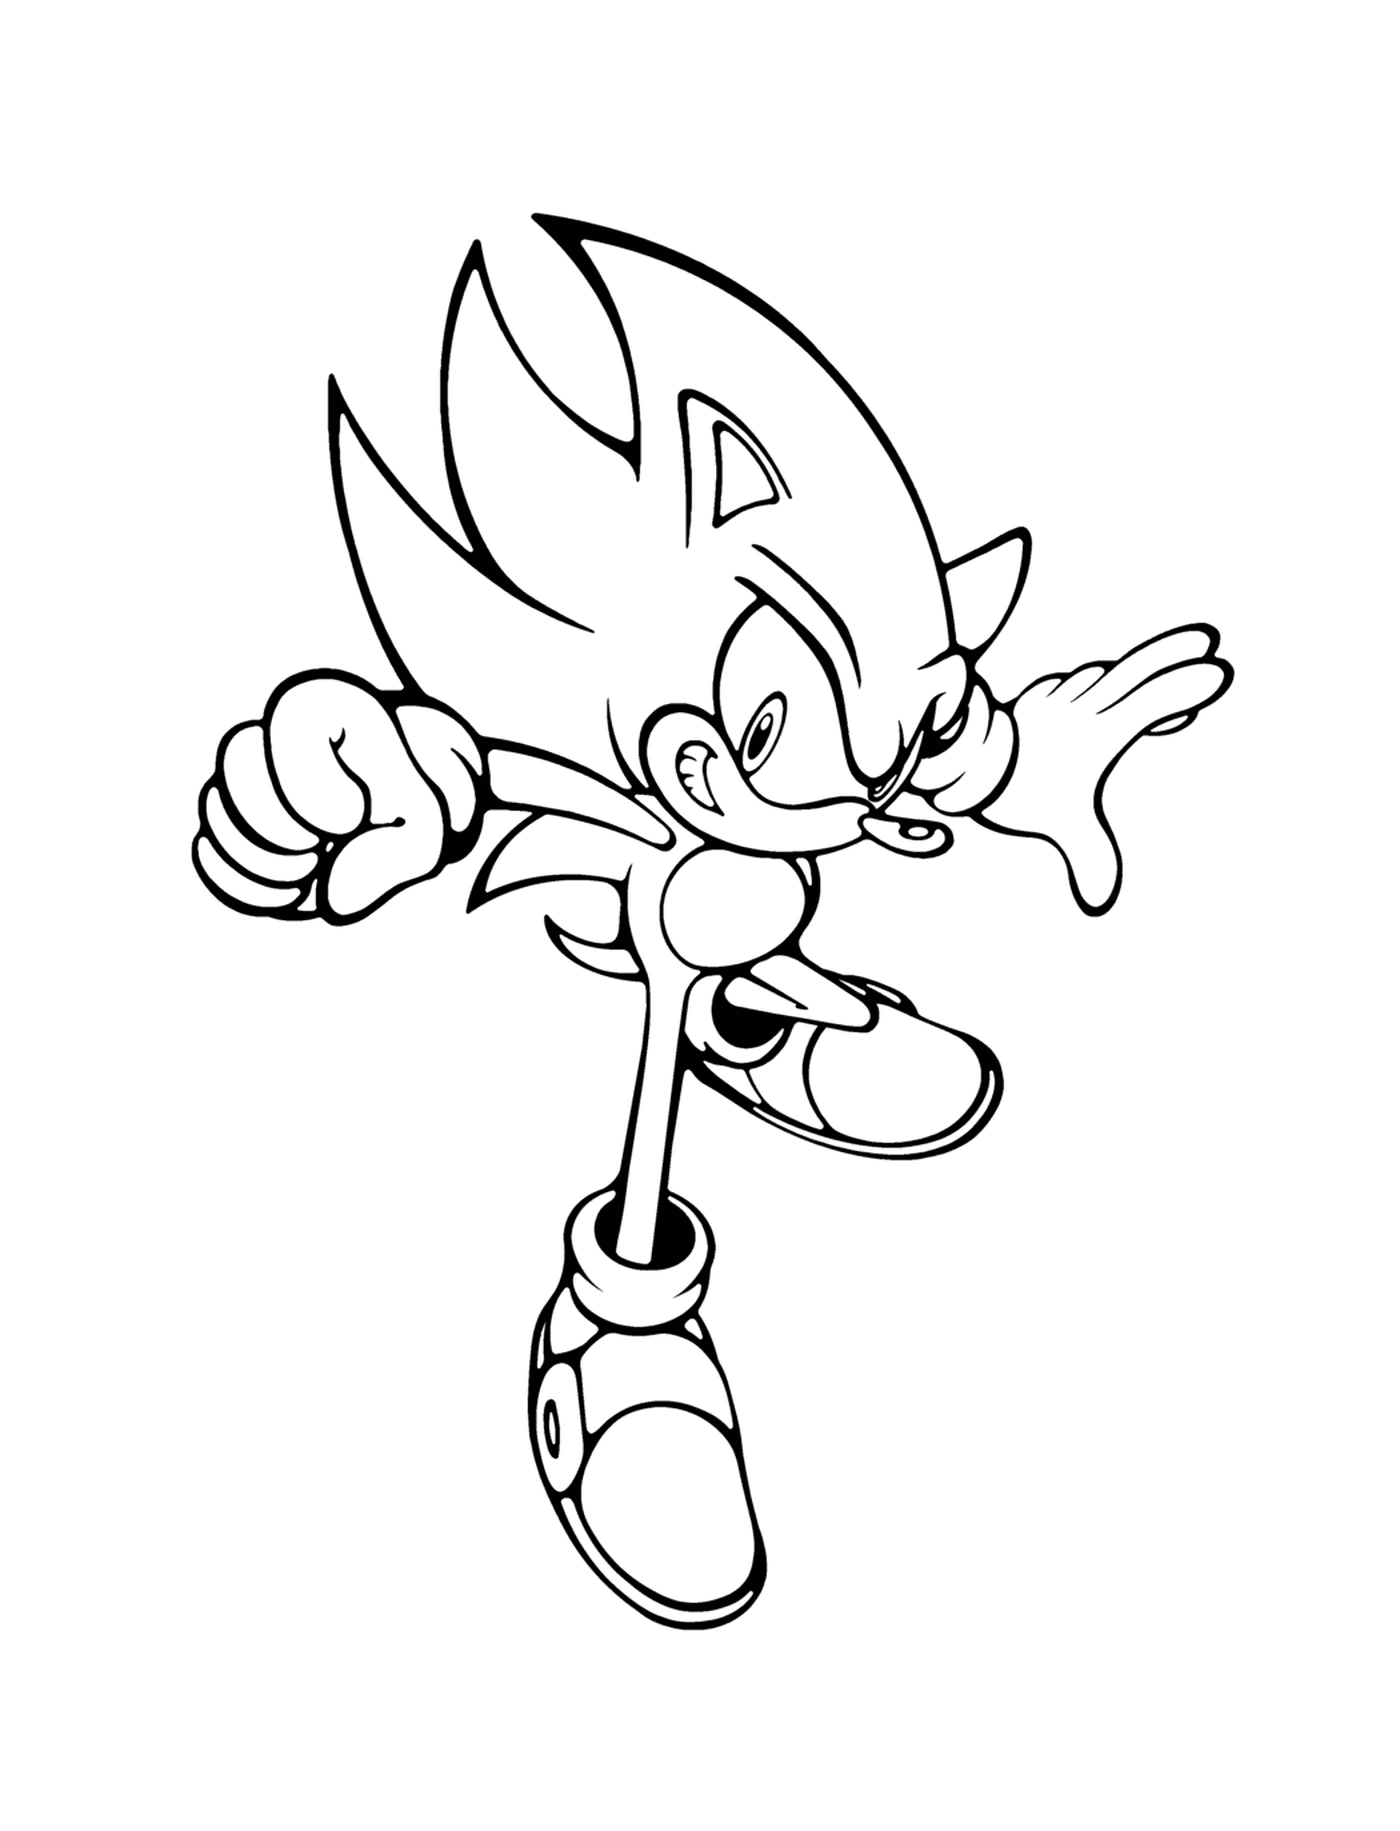  Potente Sonic 